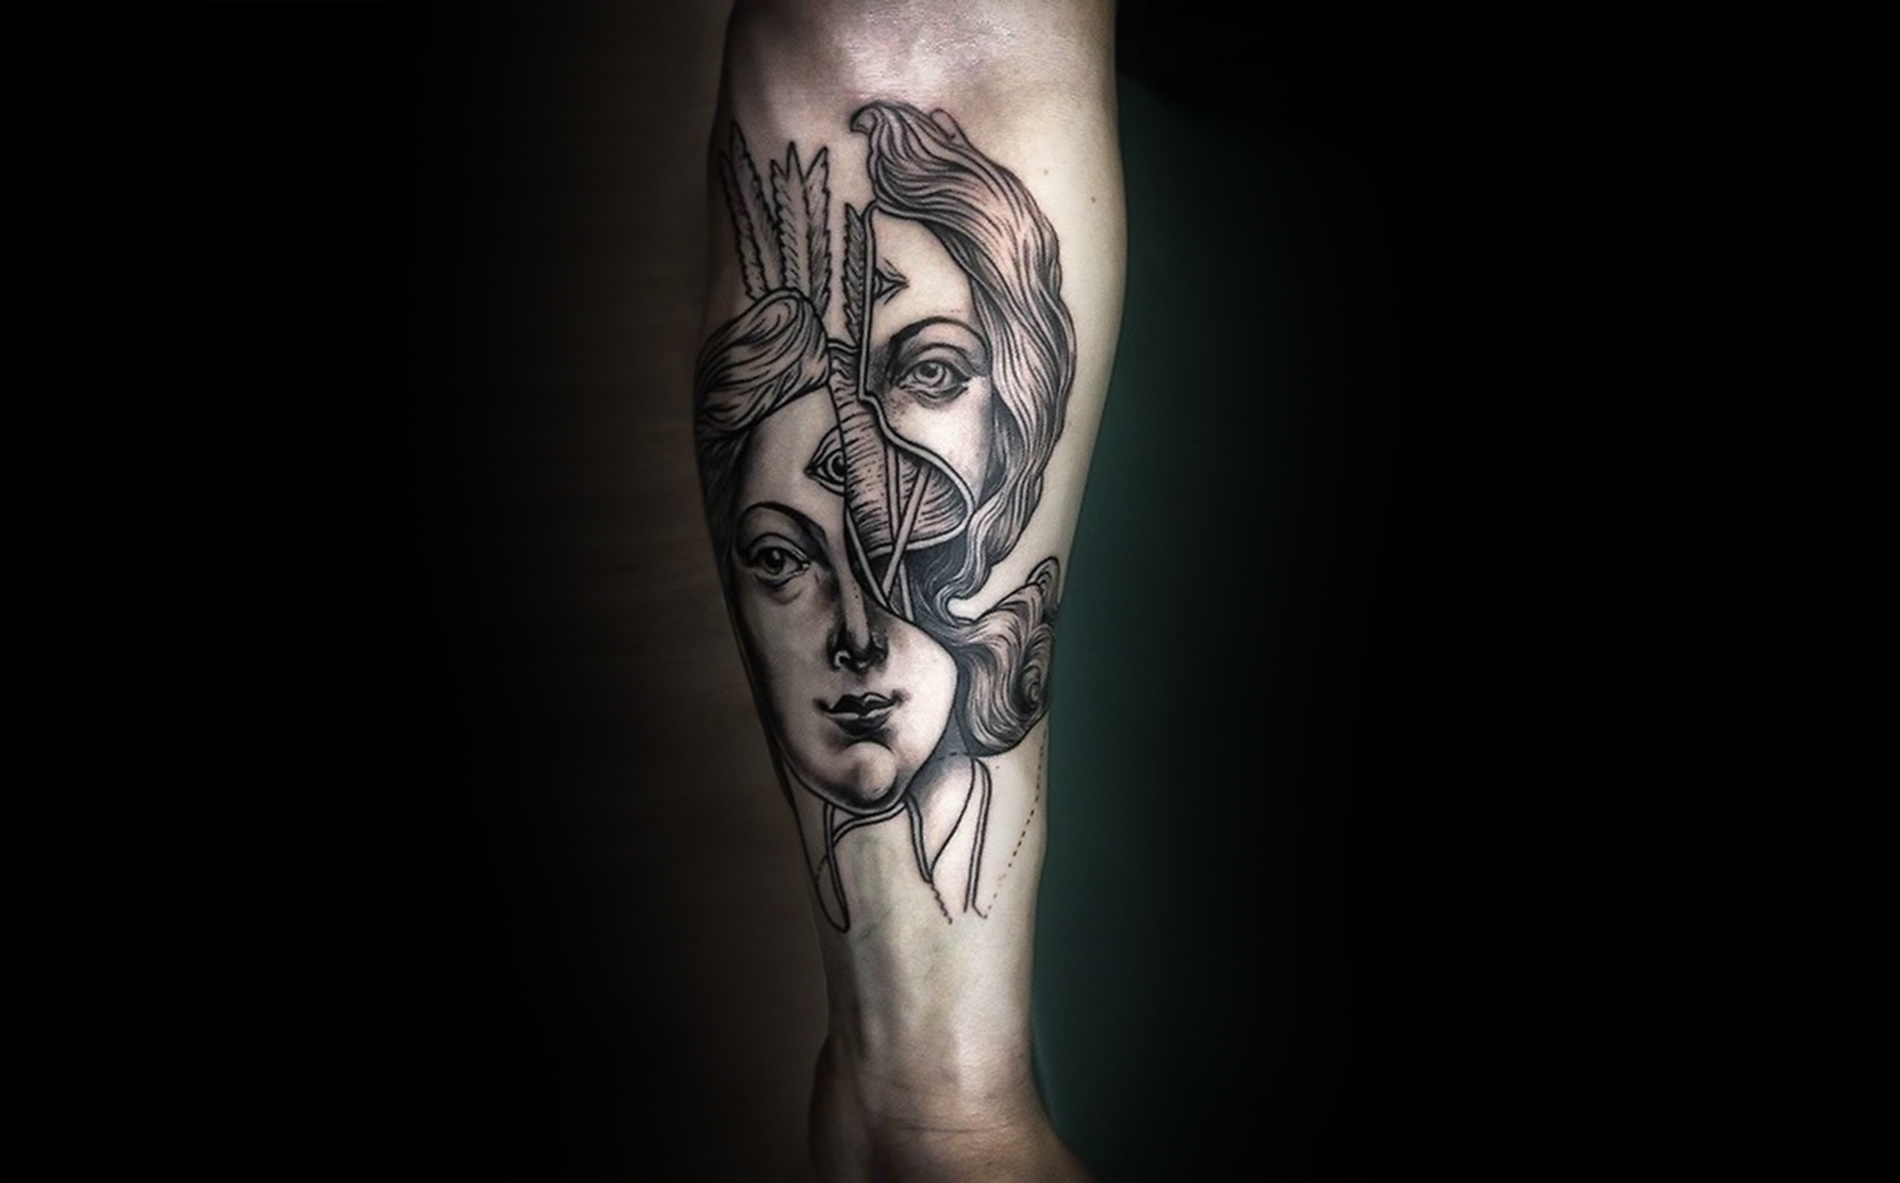 cut in half. Renaissance beauty sliced-up. Tattoo by Nick Broslavskiy.